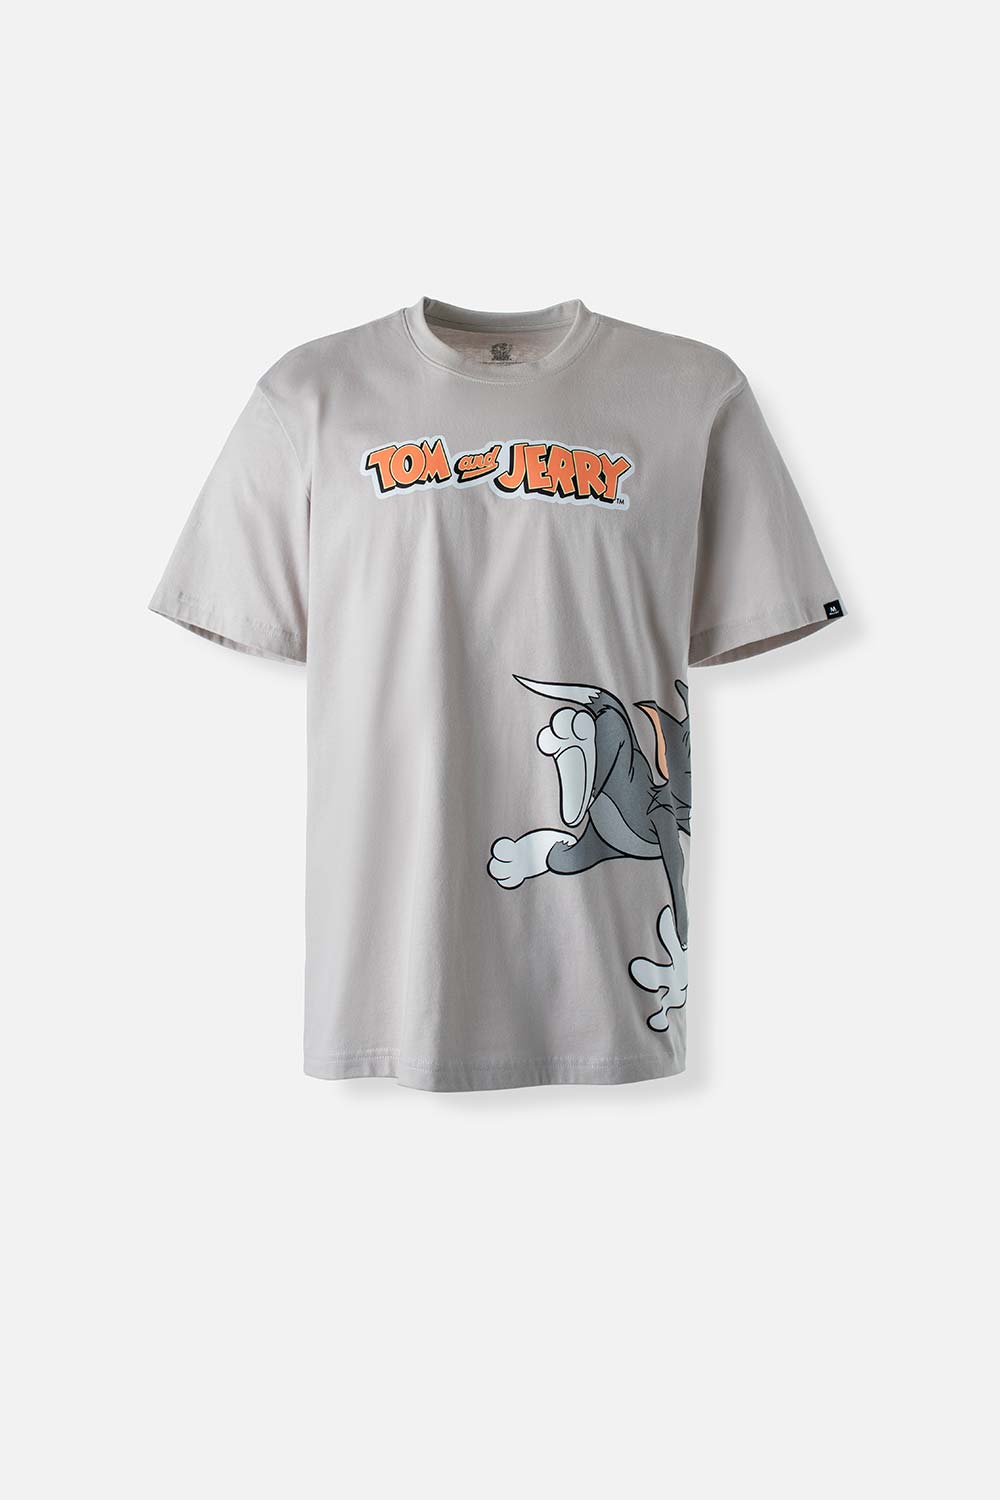 Camiseta de Tom & Jerry manga corta gris género neutro XS-0